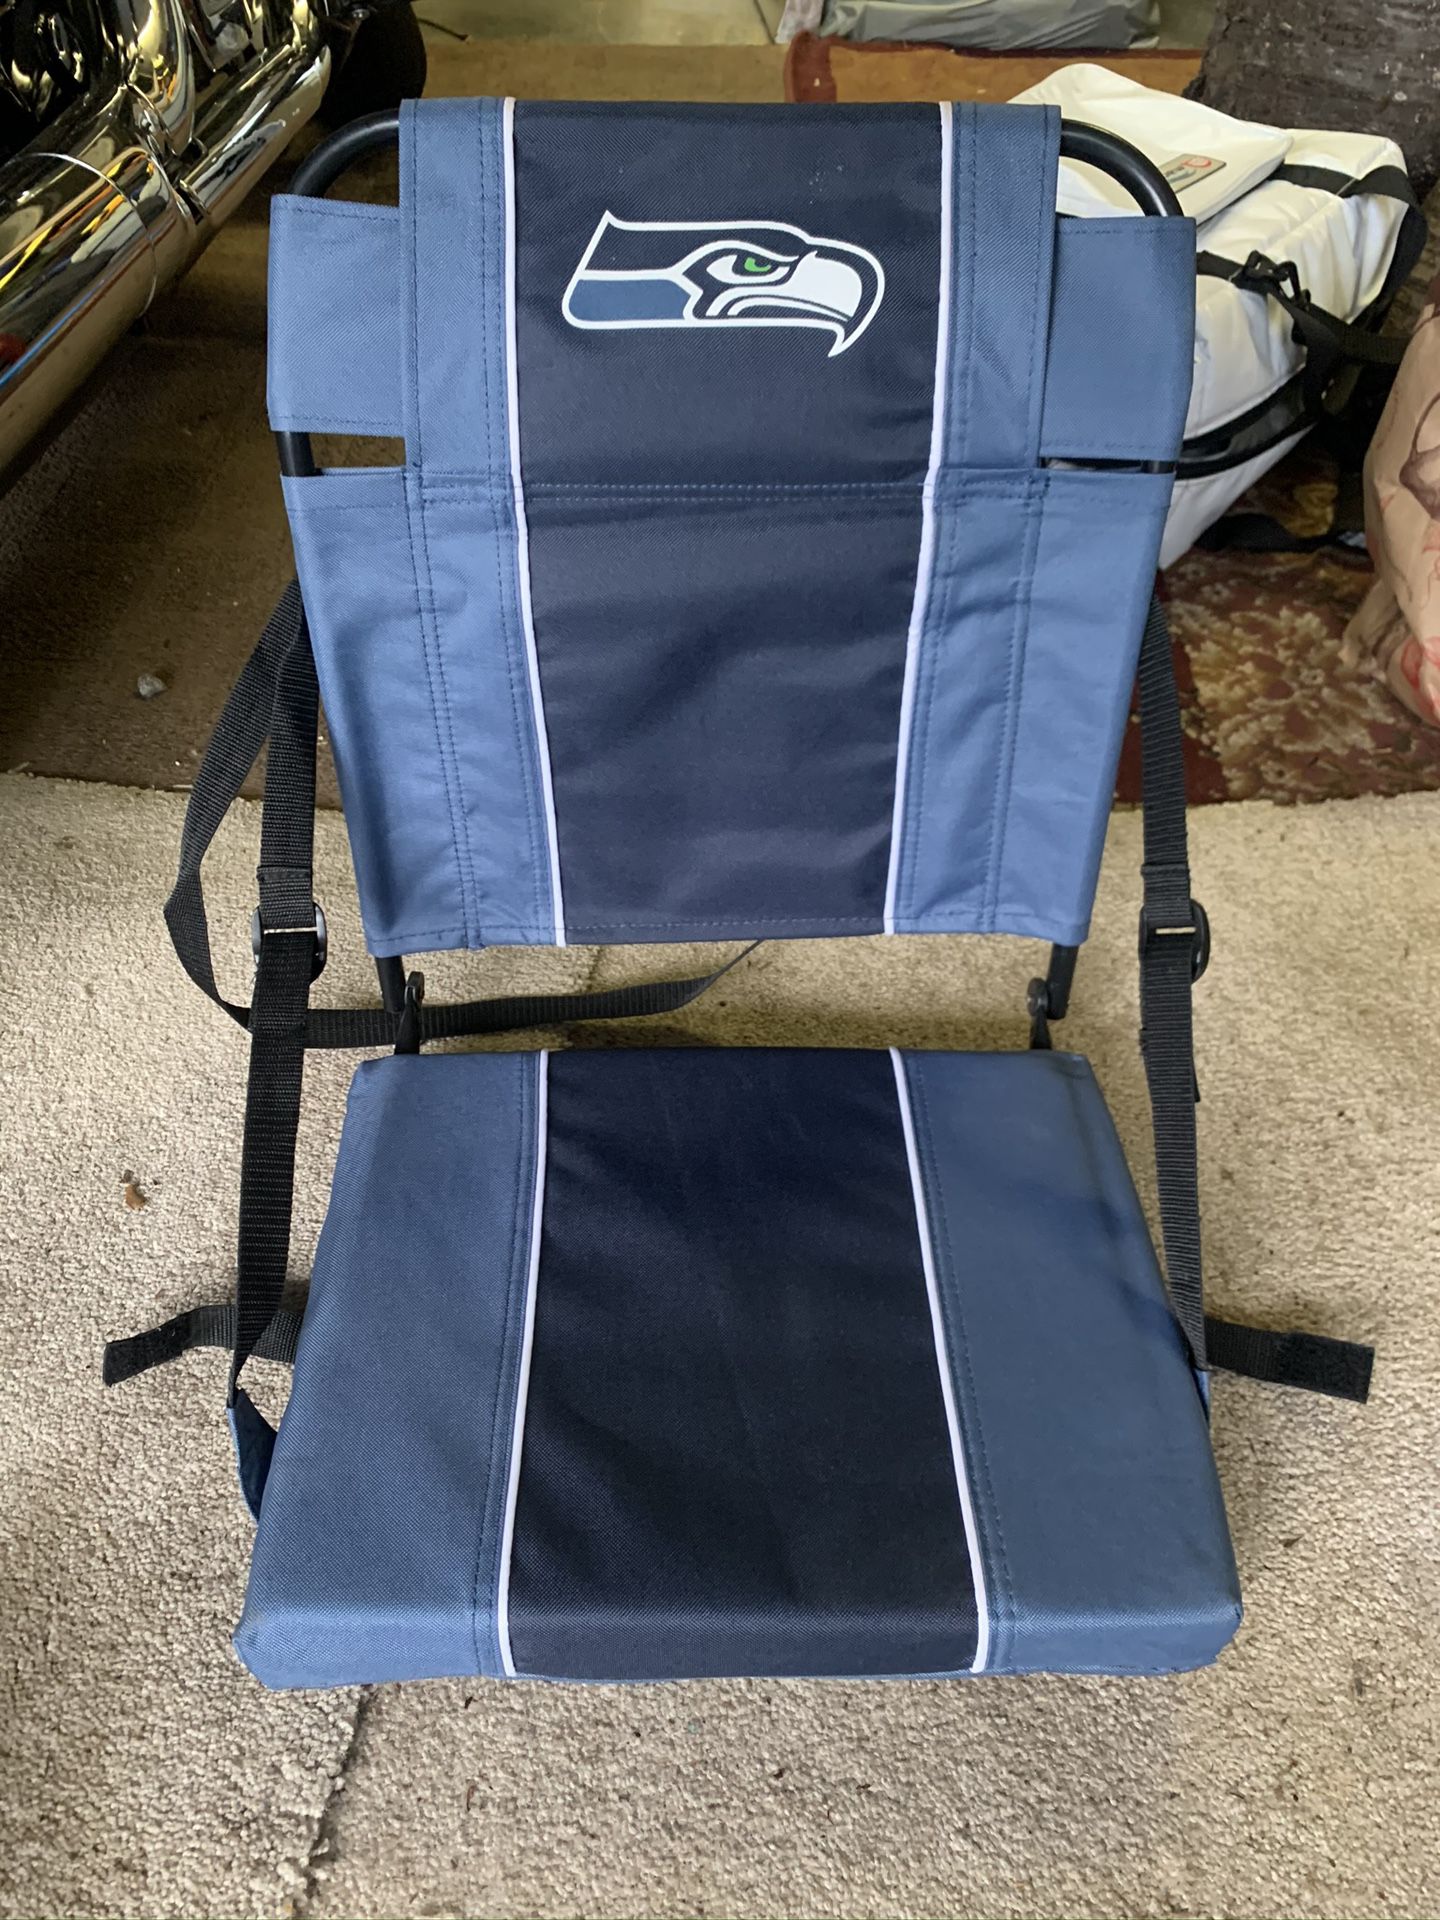 Seahawks folding stadium chair